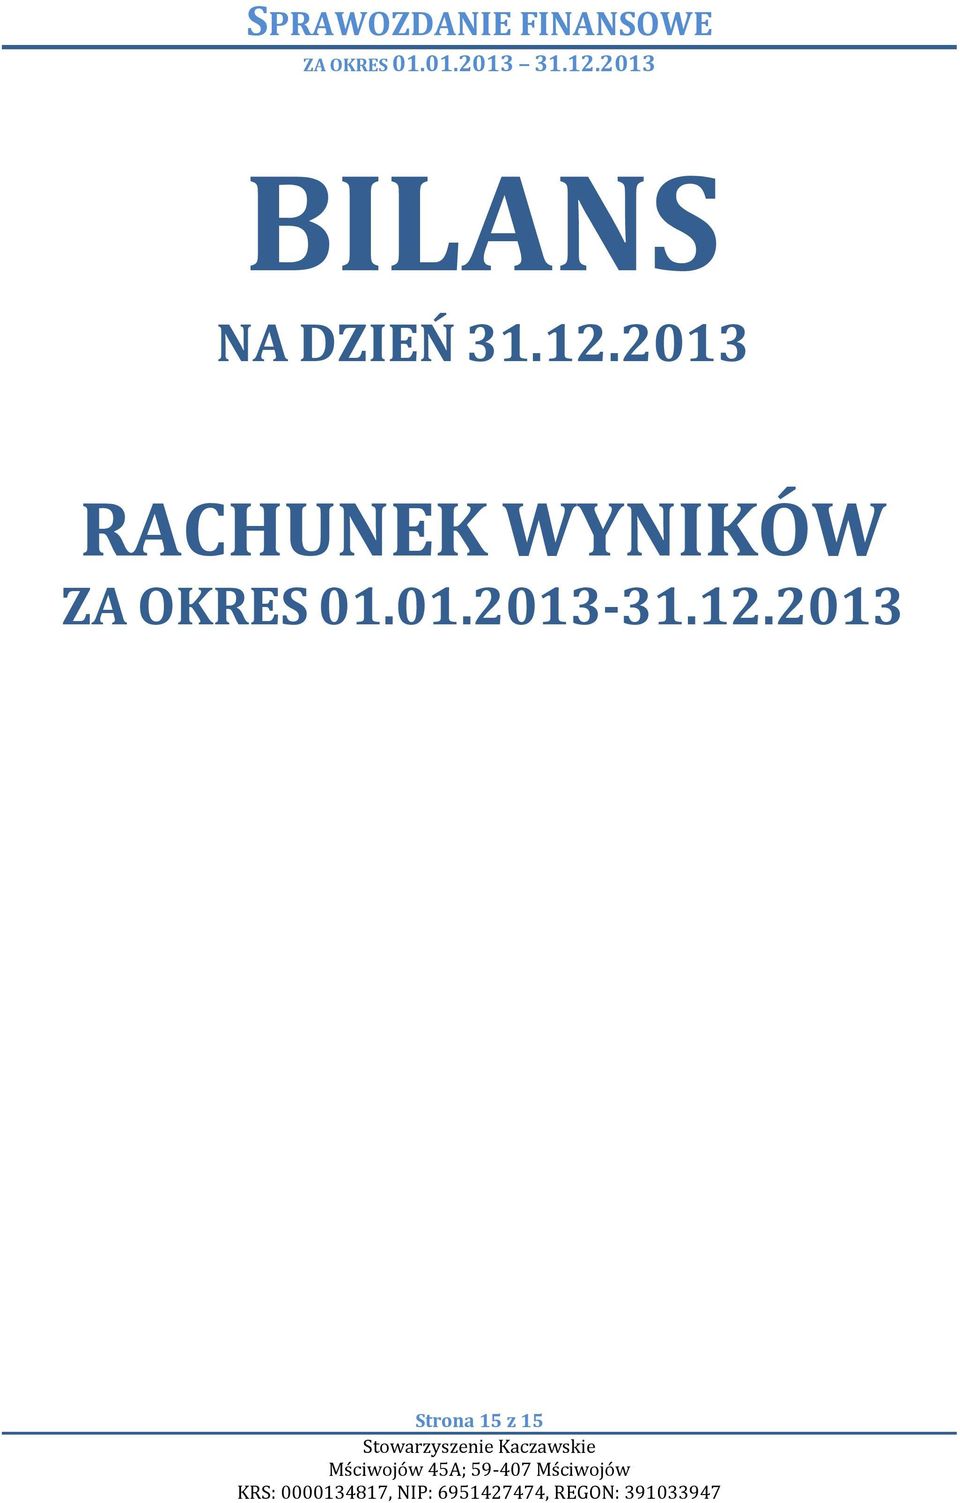 ZA OKRES 01.01.2013-31.